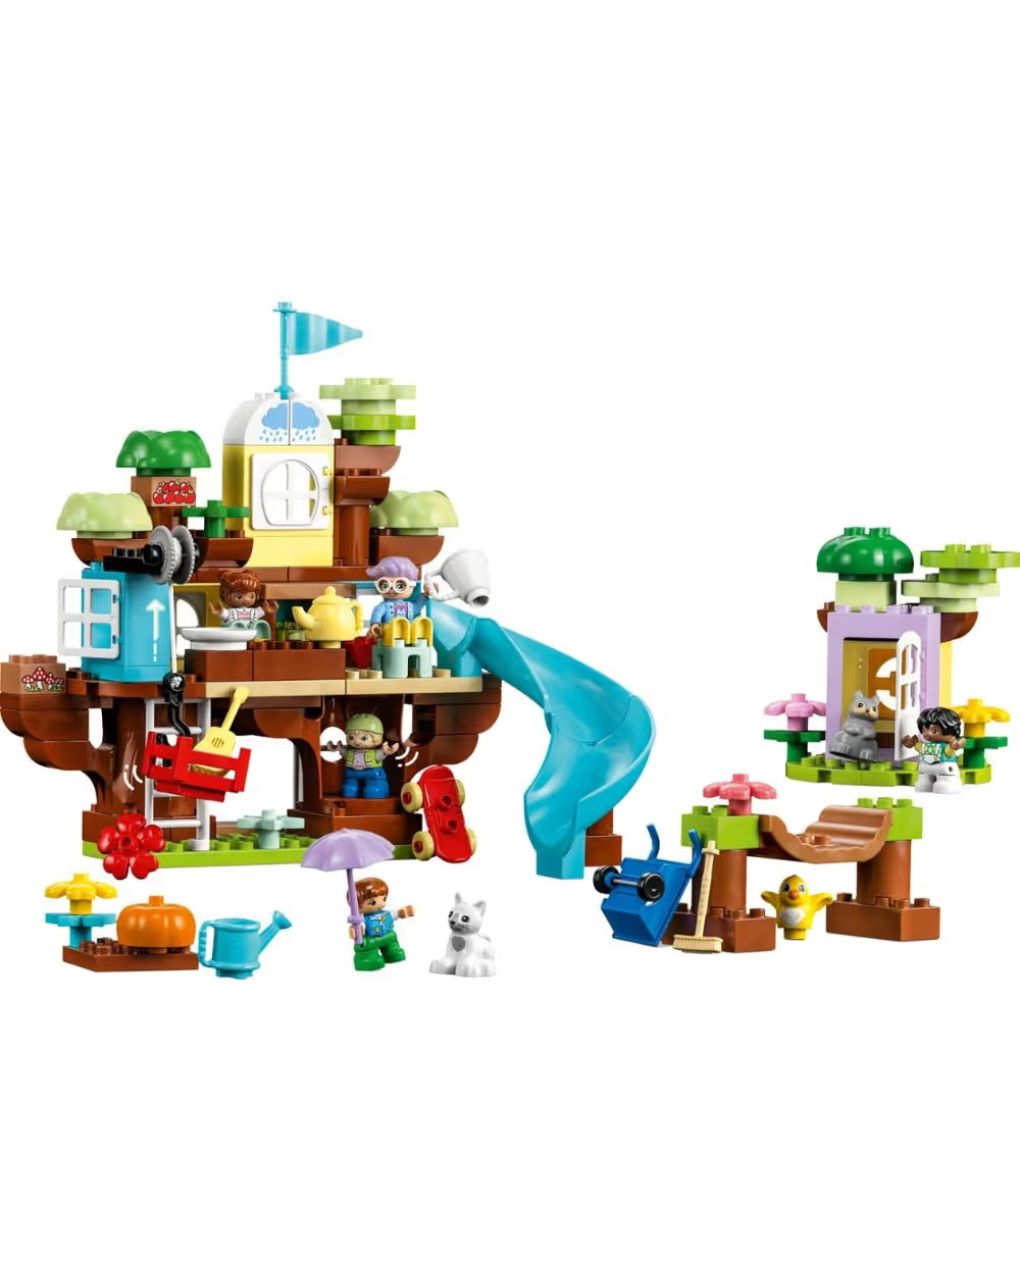 Lego duplo 3in1 tree house 10993 - Lego